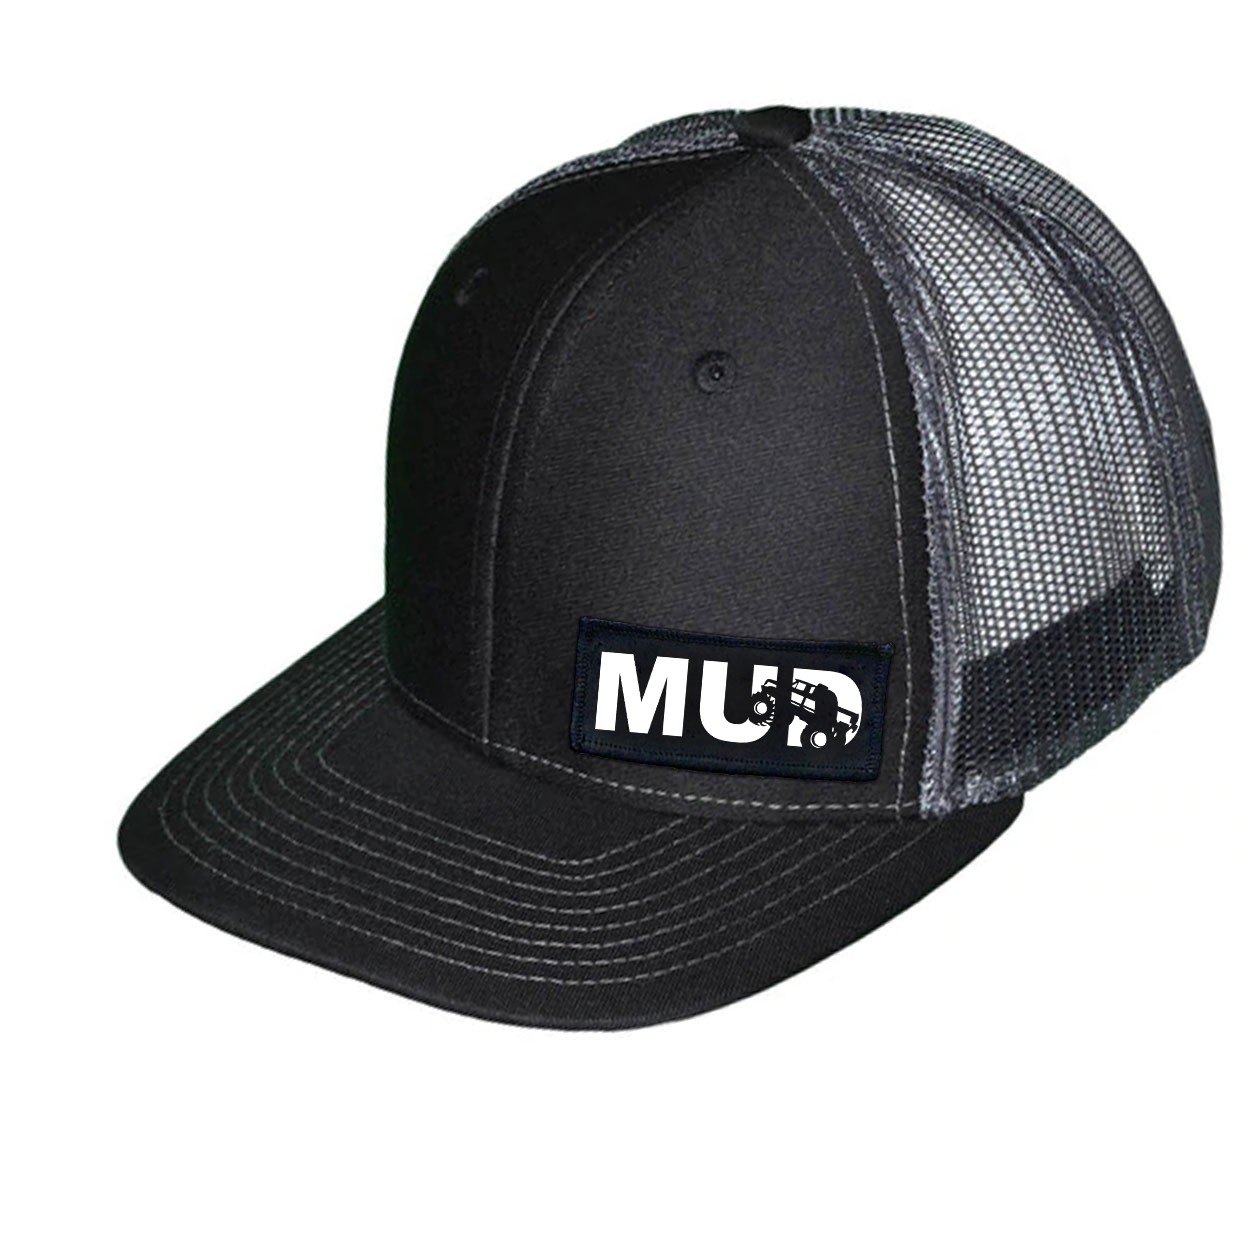 Mud Truck Logo Night Out Woven Patch Snapback Trucker Hat Black/Dark Gray (White Logo)